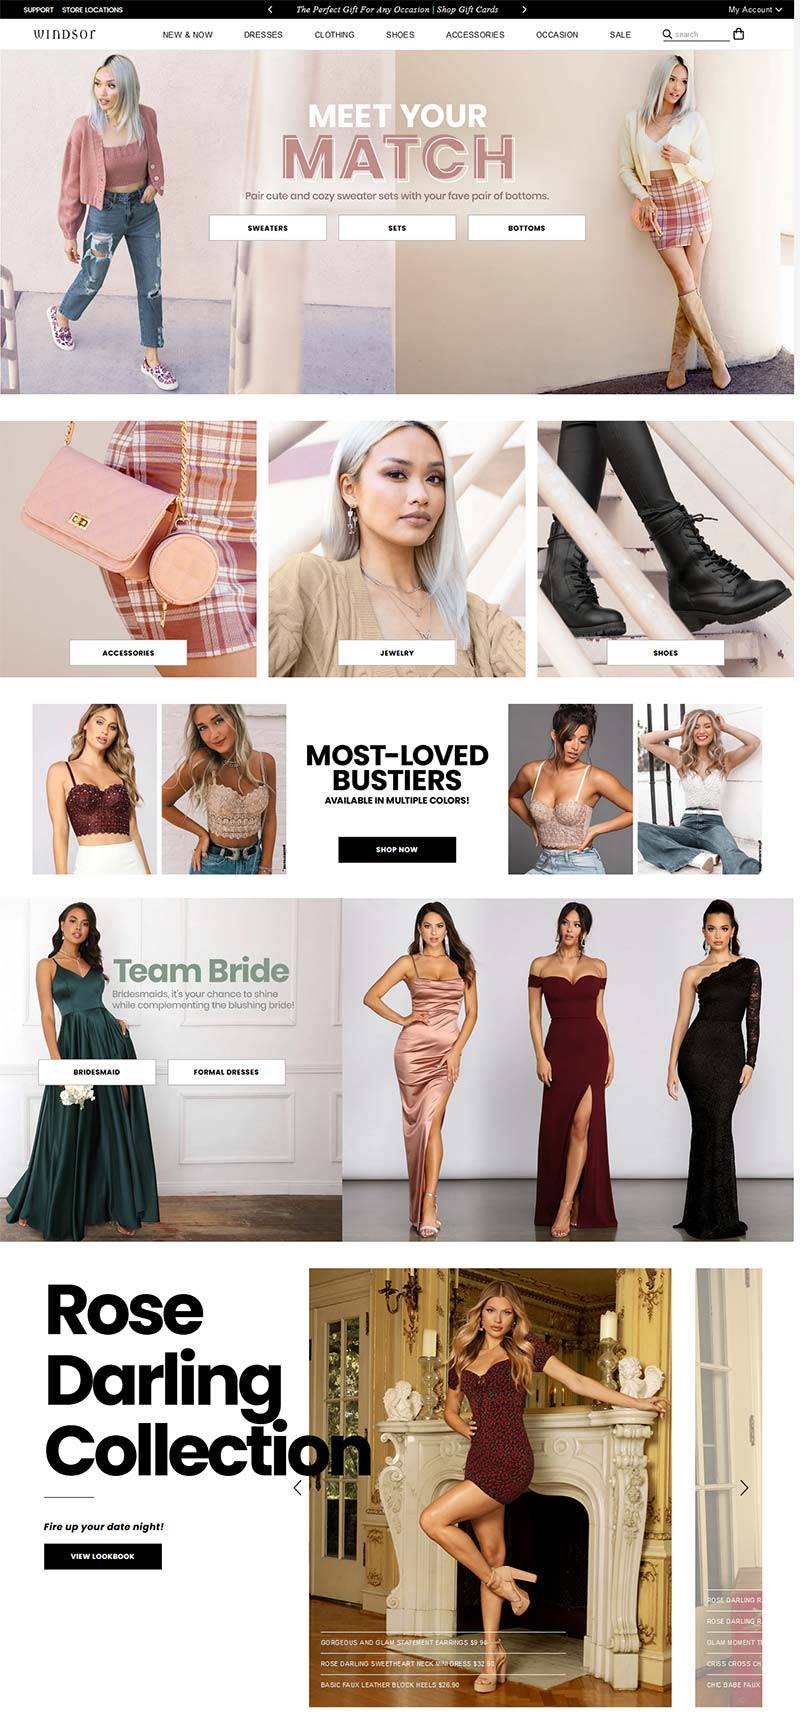 Windsor 温莎-美国品牌女装购物网站